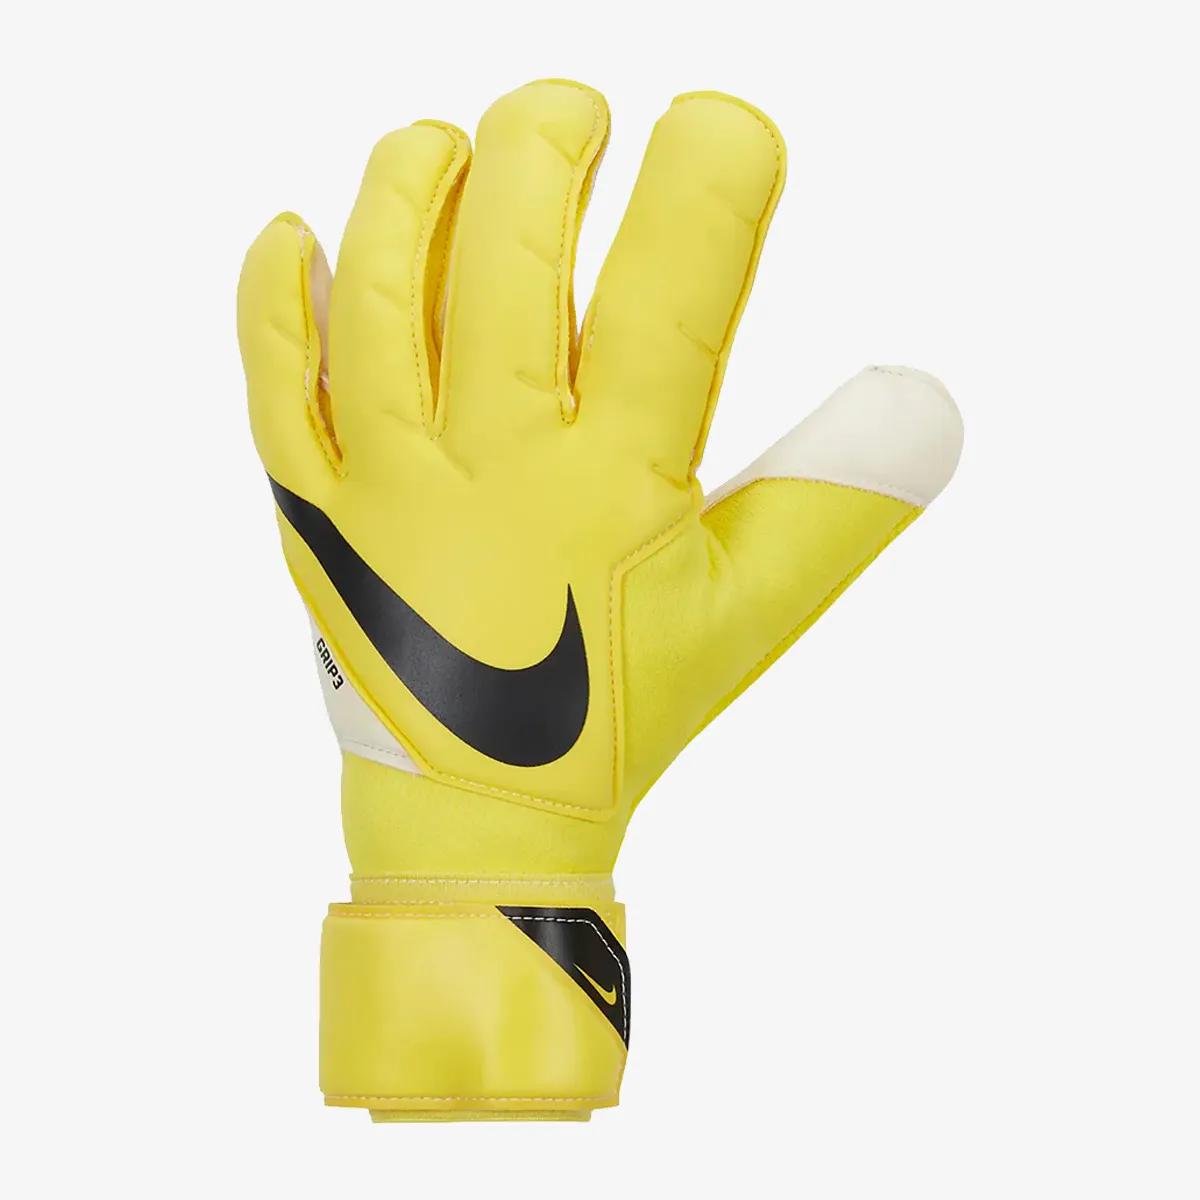 Nike Manusi portar Goalkeeper Grip3 